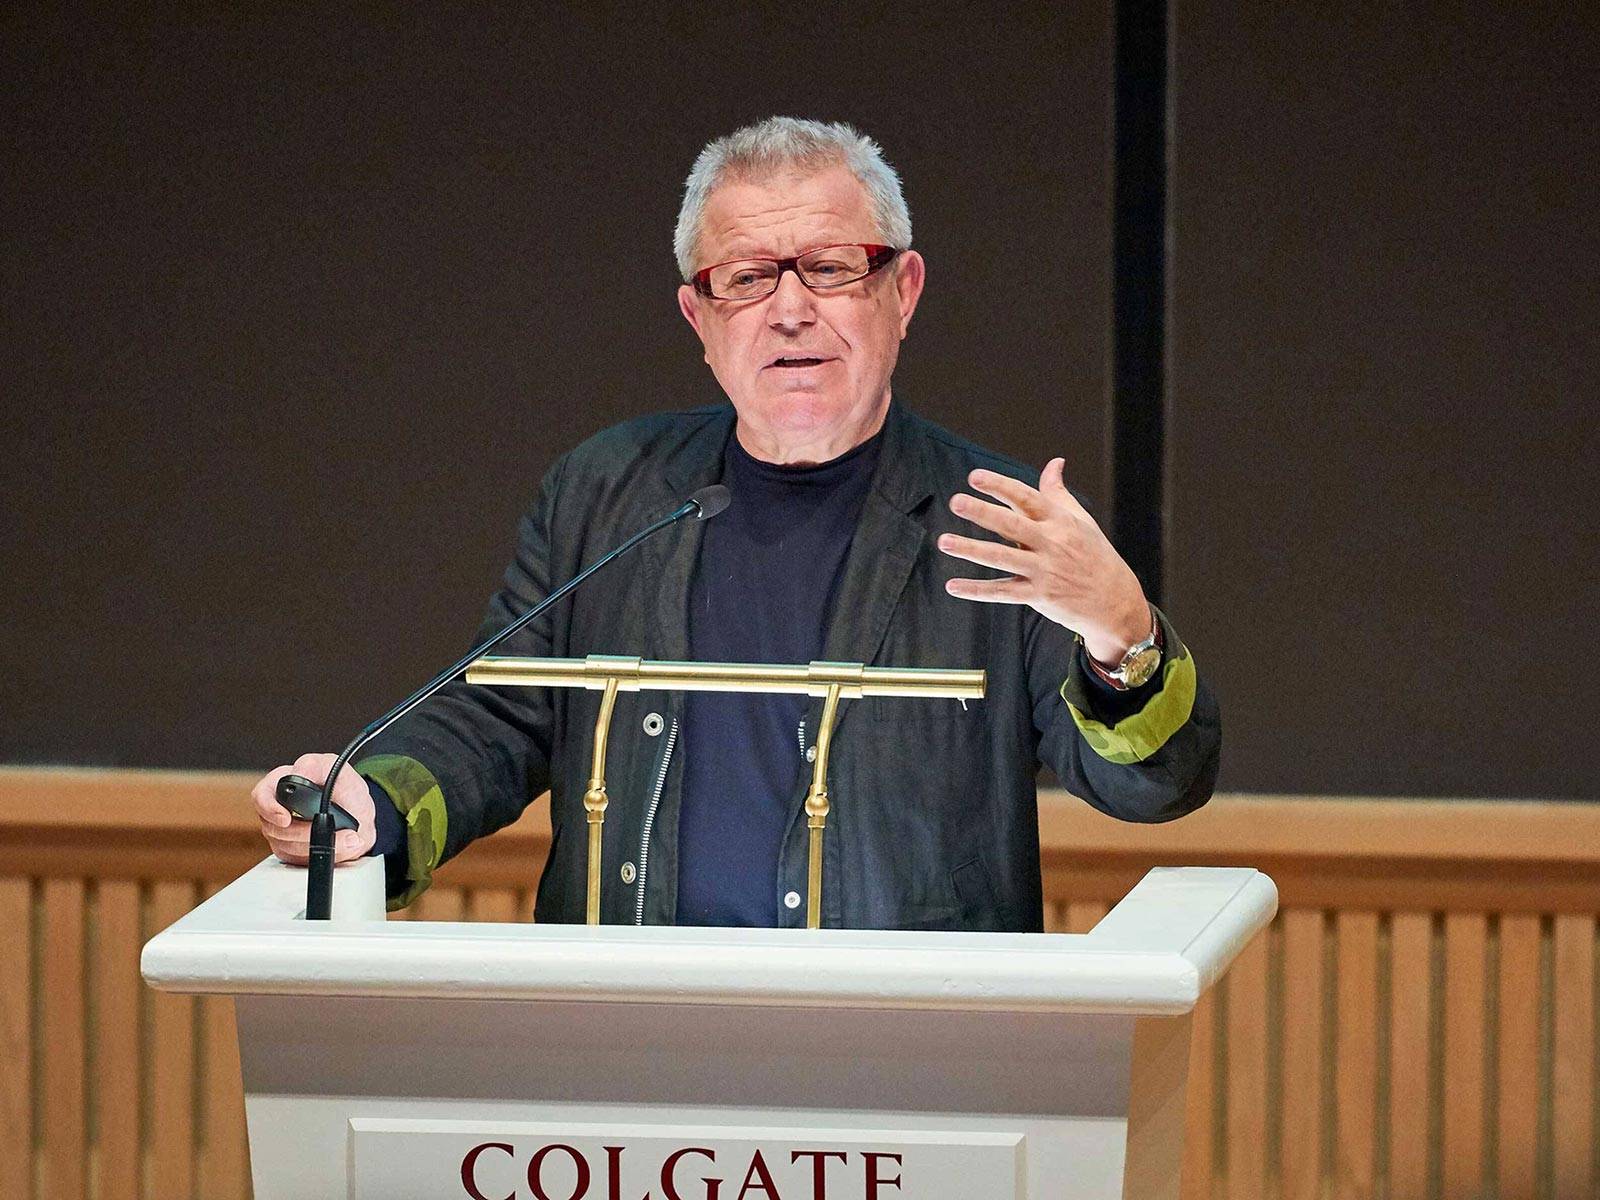 Daniel Libeskind speaking at a Colgate University podium